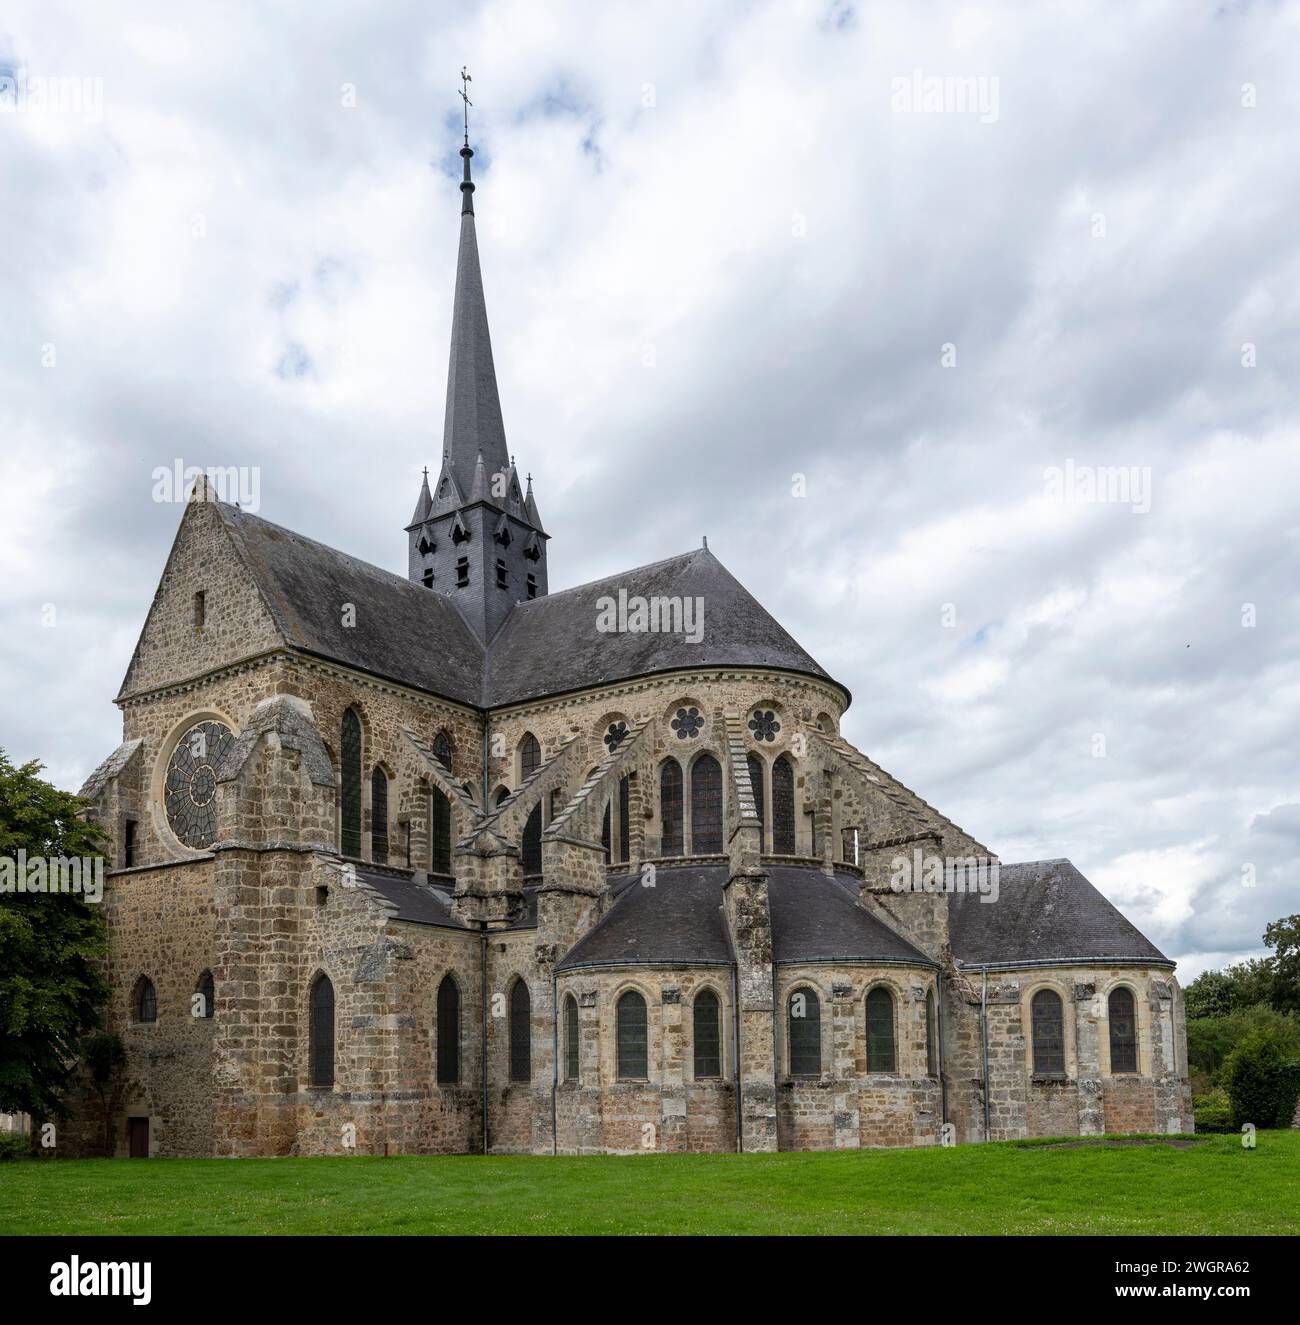 The abbey Saint Pierre et Saint Paul in Orbais-l'Abbaye, Marne, France. Stock Photo